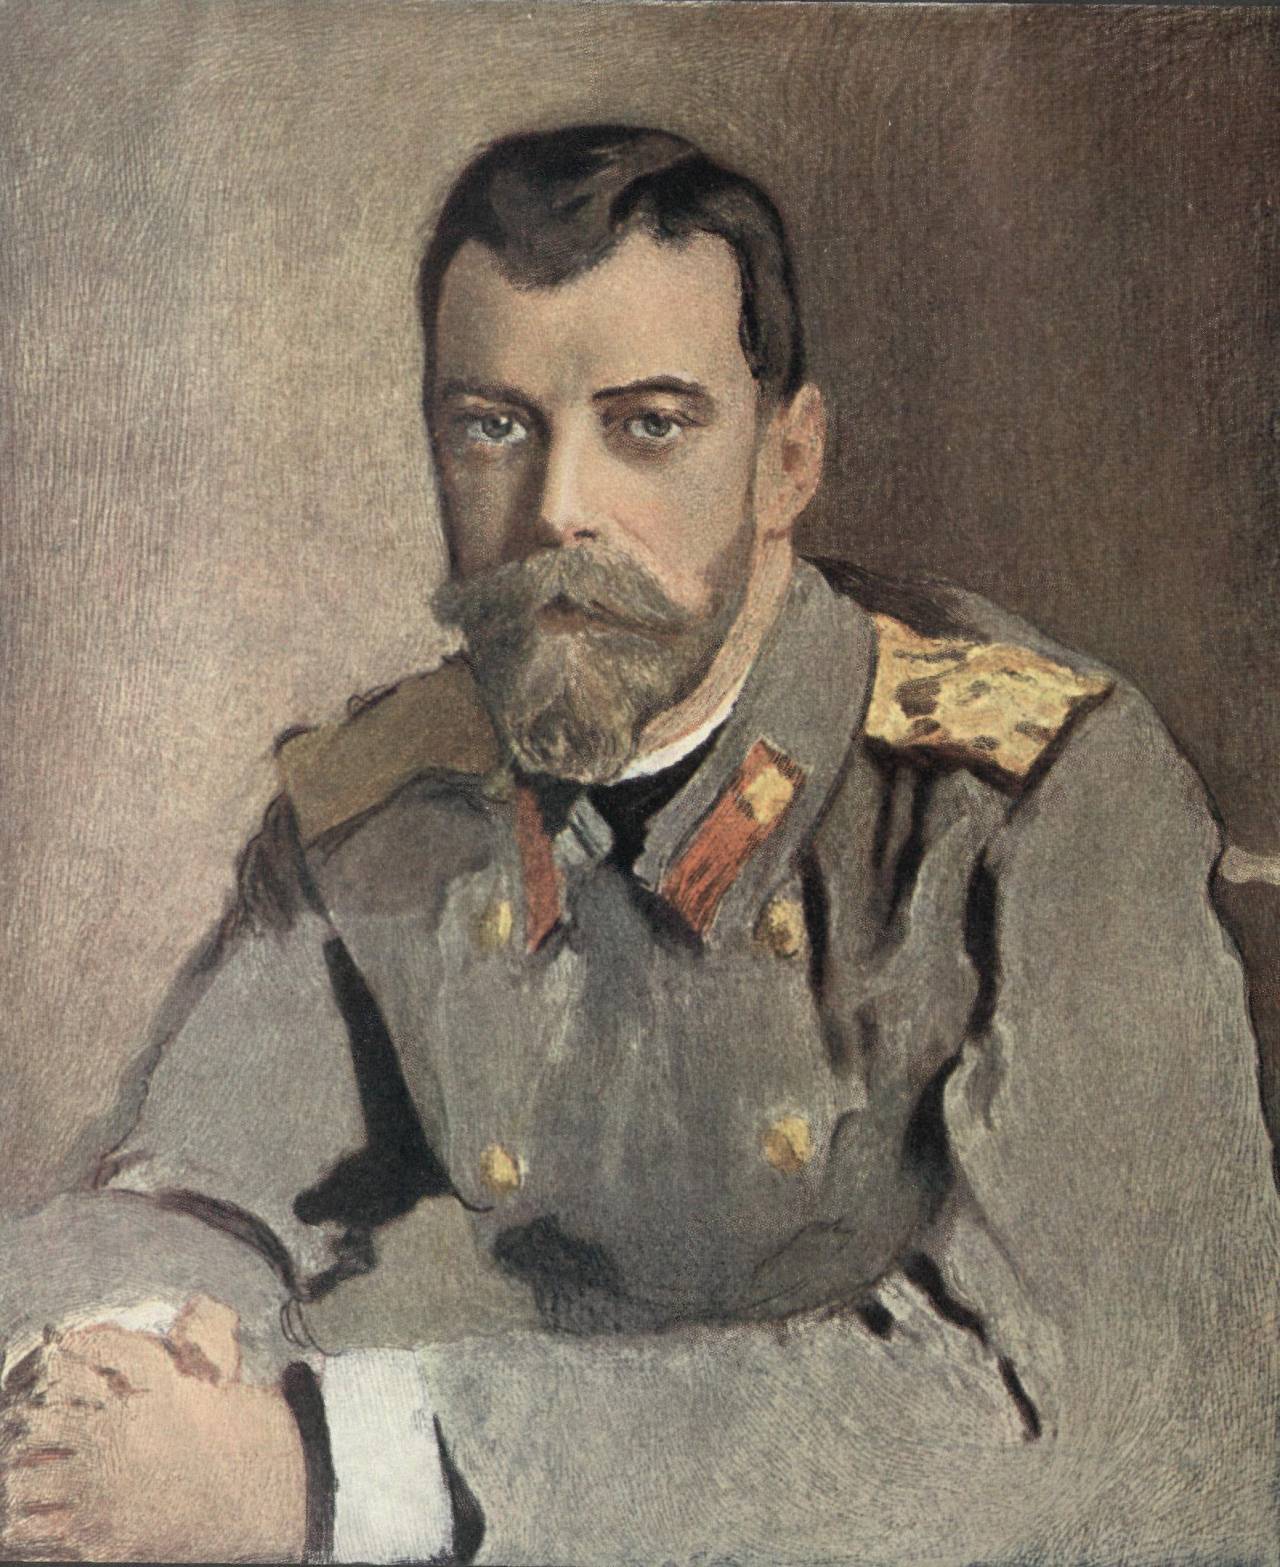 Anatoly Mikhaylovich Stessel, Soviet commander, WWII